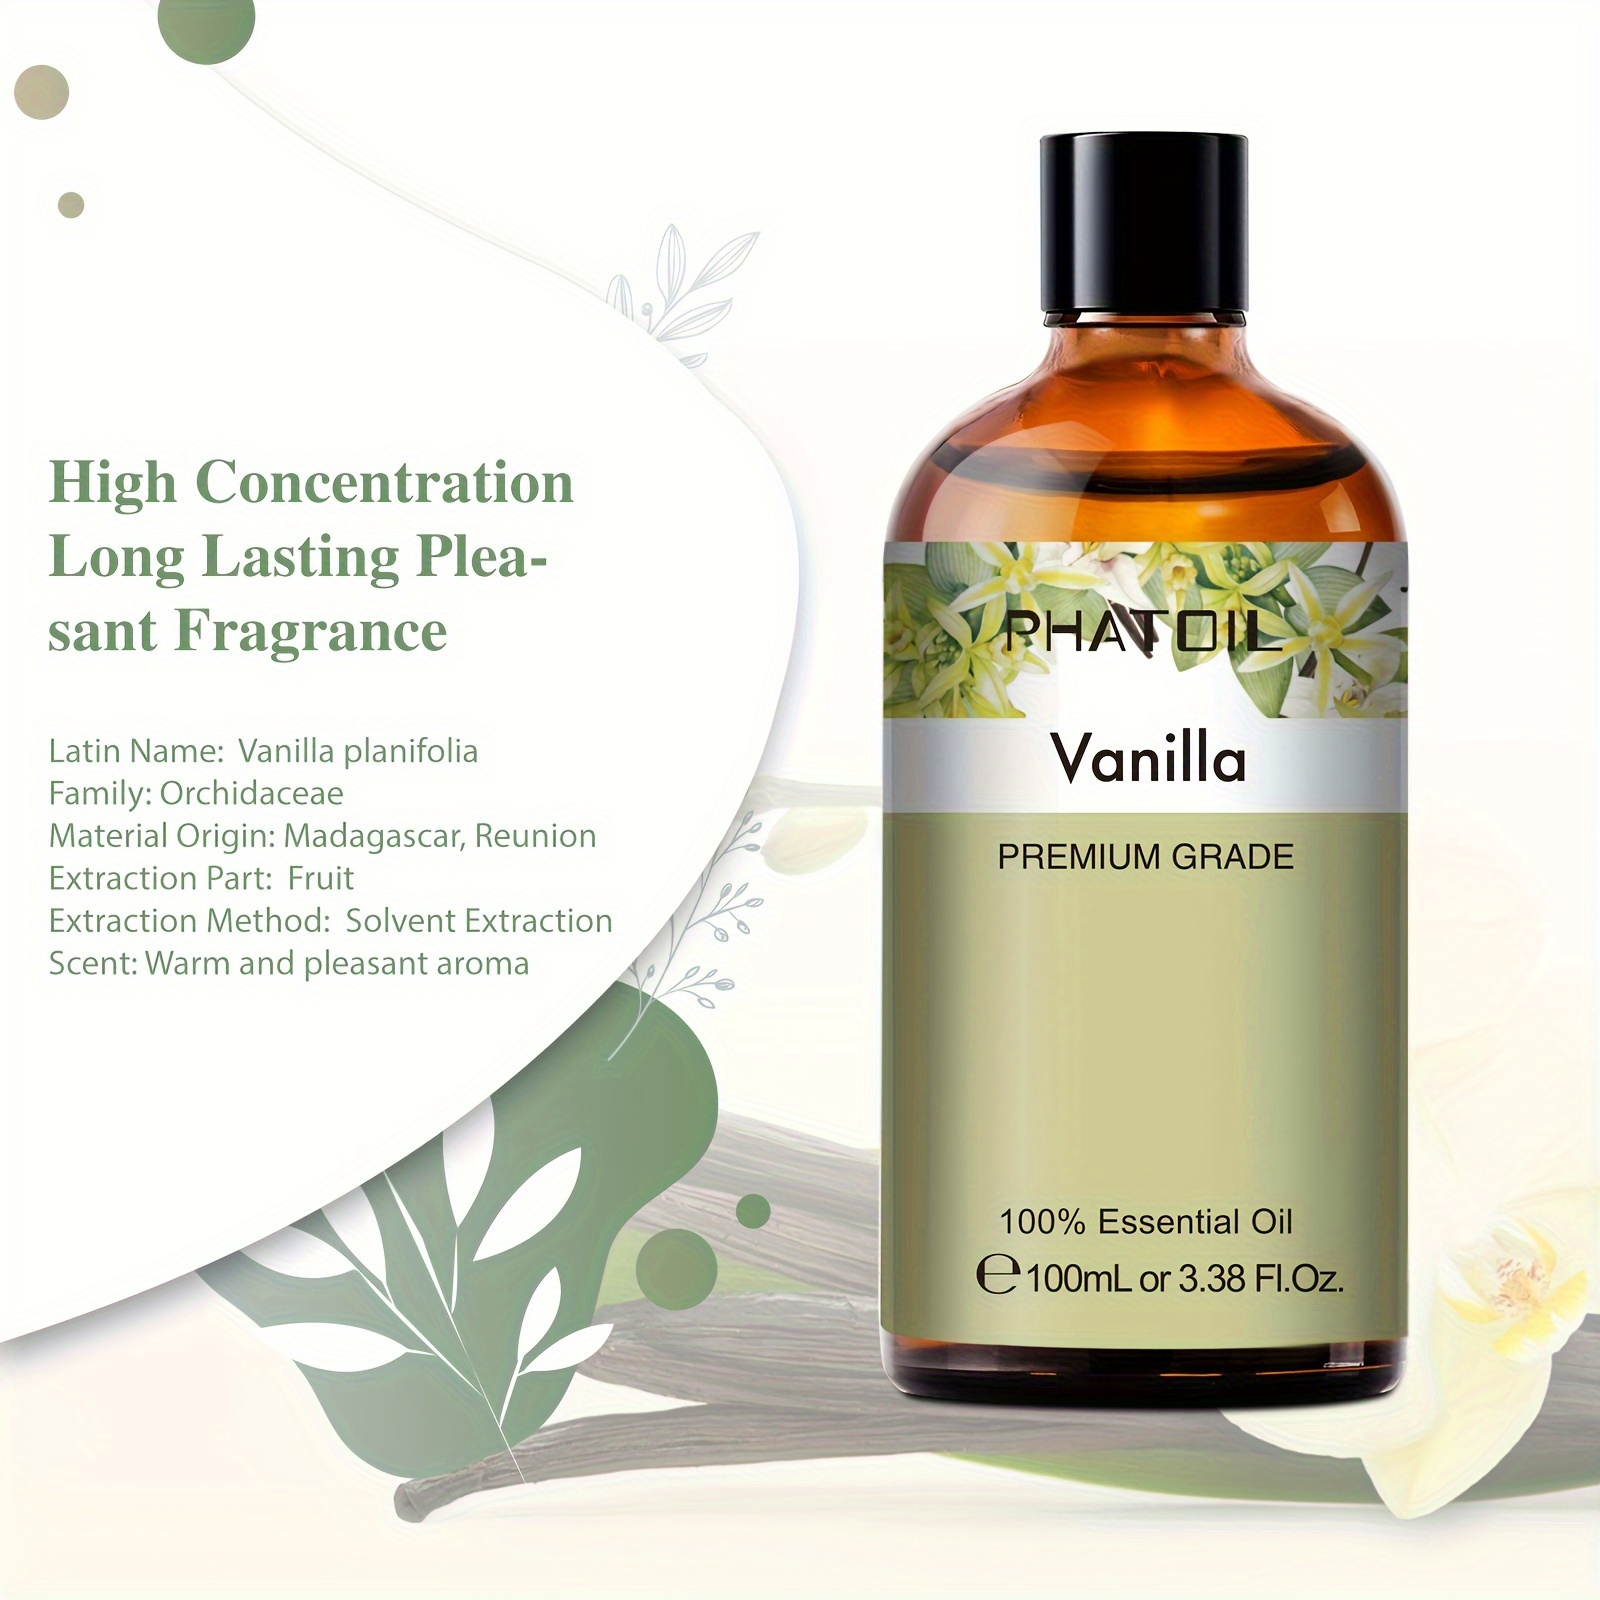 PHATOIL 100% Pure Essential Oil 100ml Aromatherapy Oils for